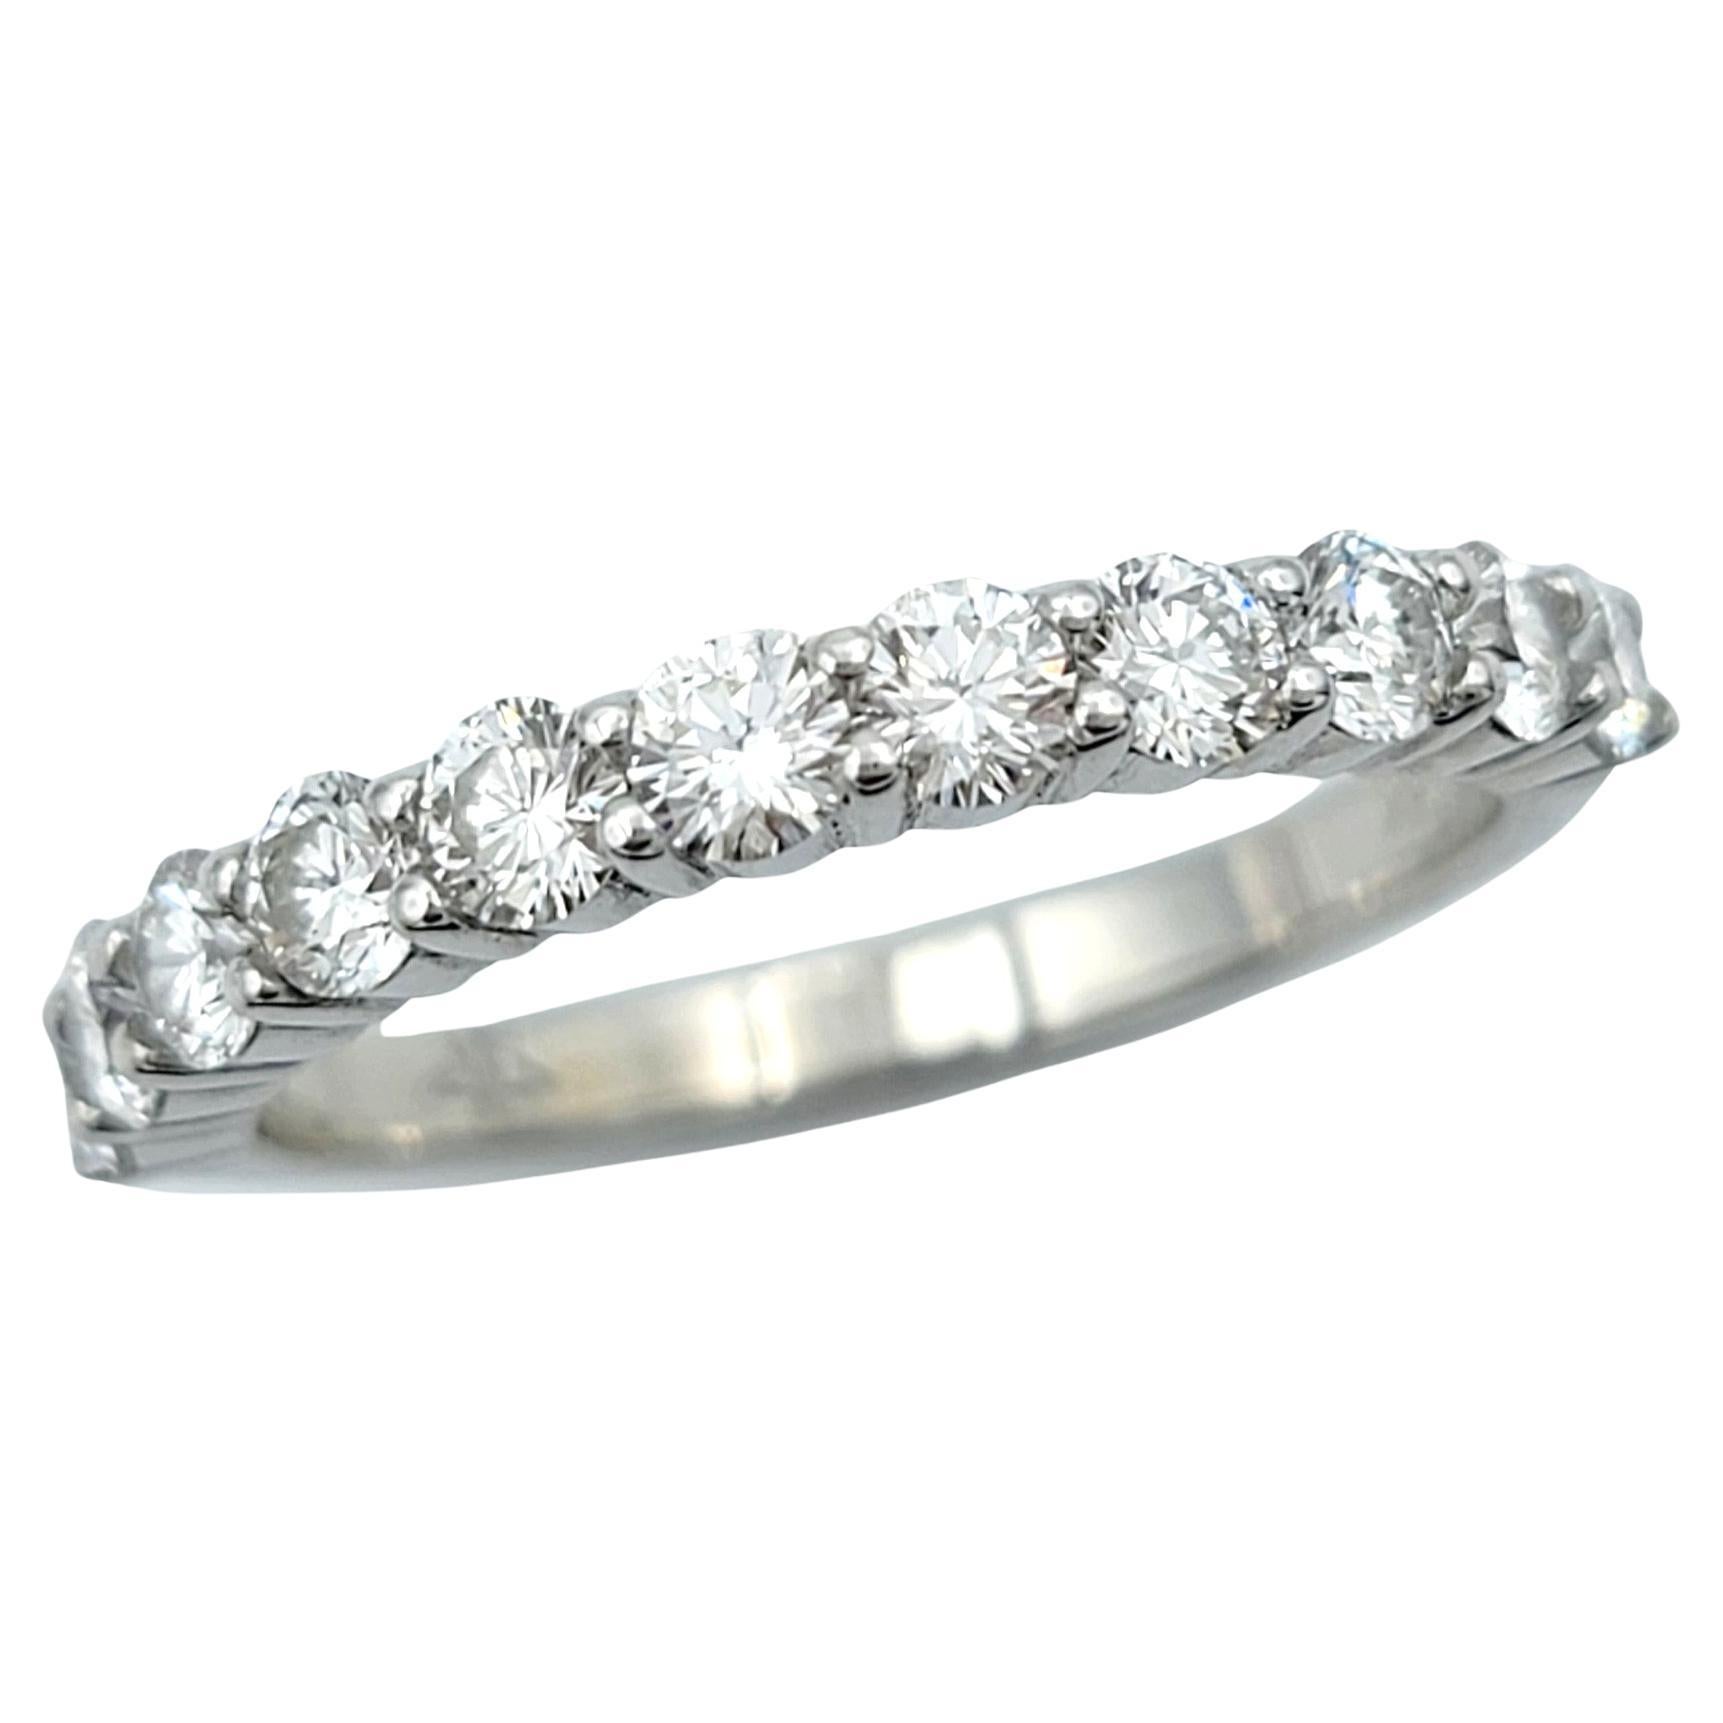 Semi-Eternity Round Diamond Band Ring Set in Polished 18 Karat White Gold